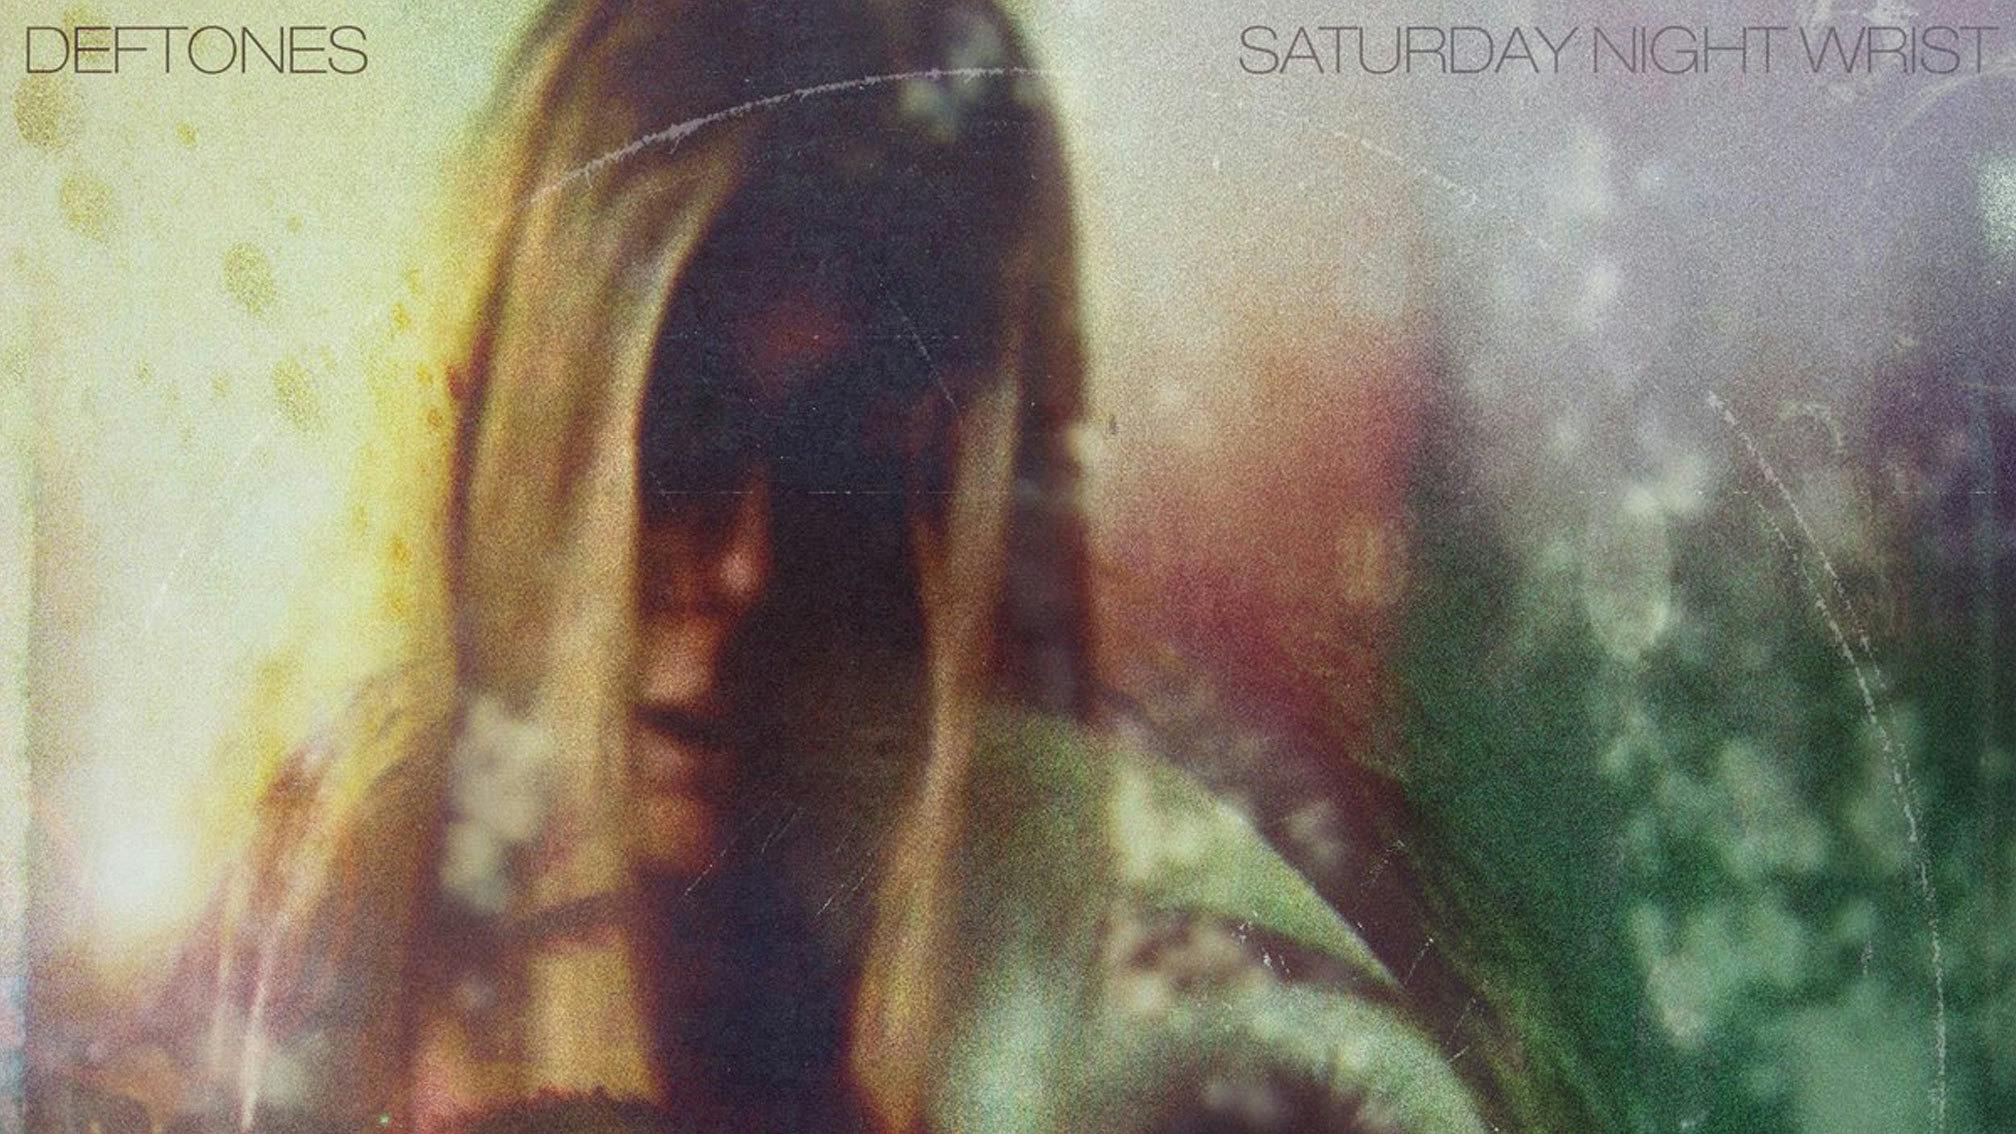 Deftones celebrate Saturday Night Wrist 15th anniversary by sharing alternate artwork concept